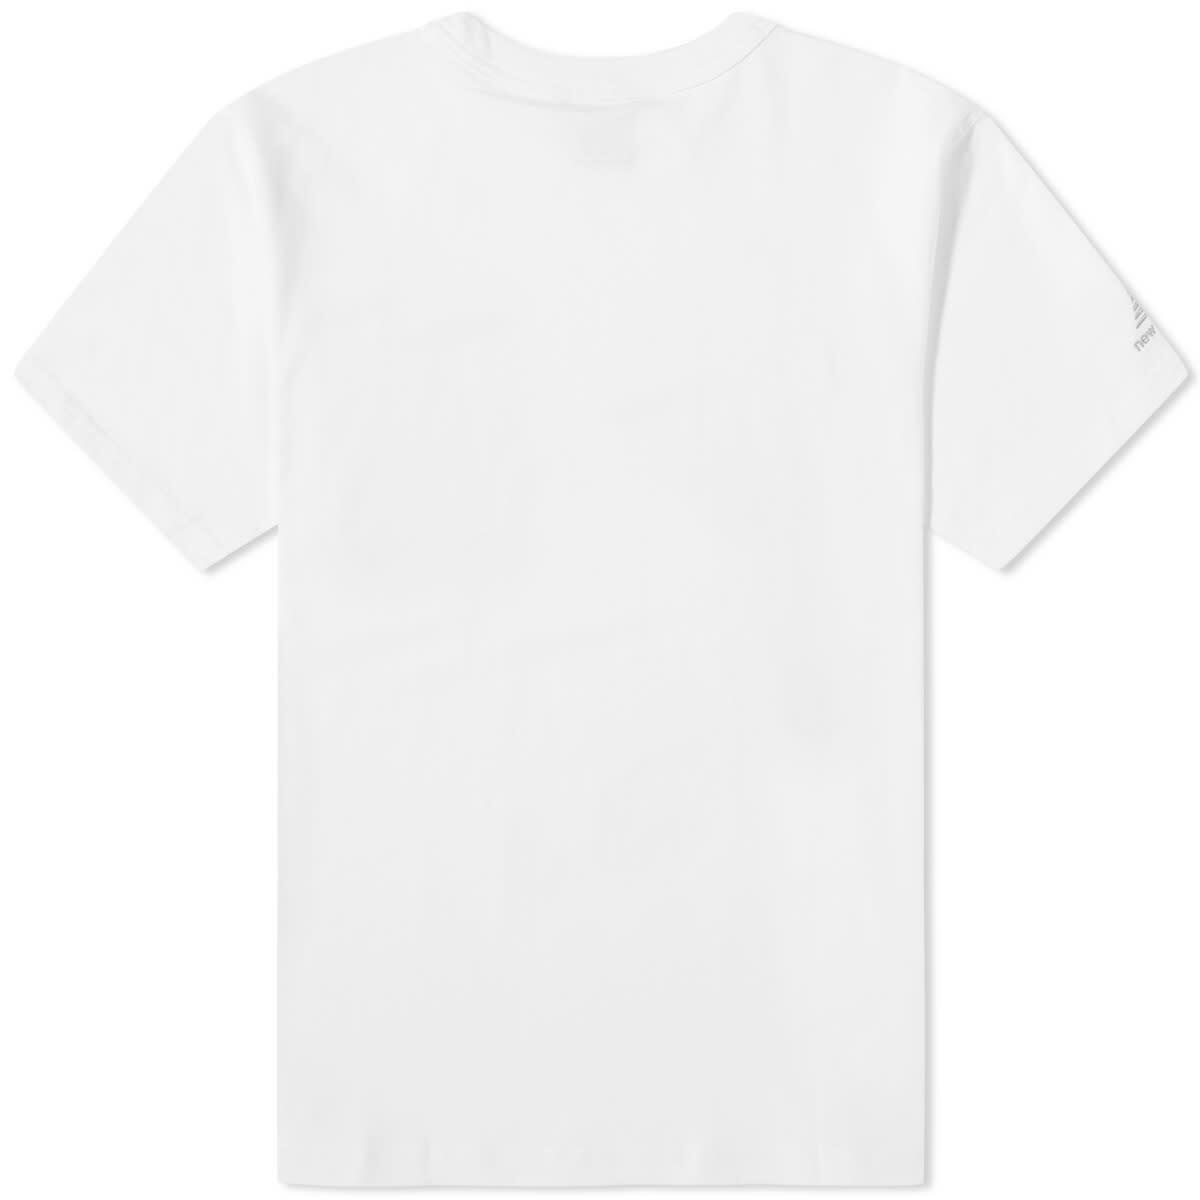 New Balance x New Rich Paul T-Shirt in White Balance